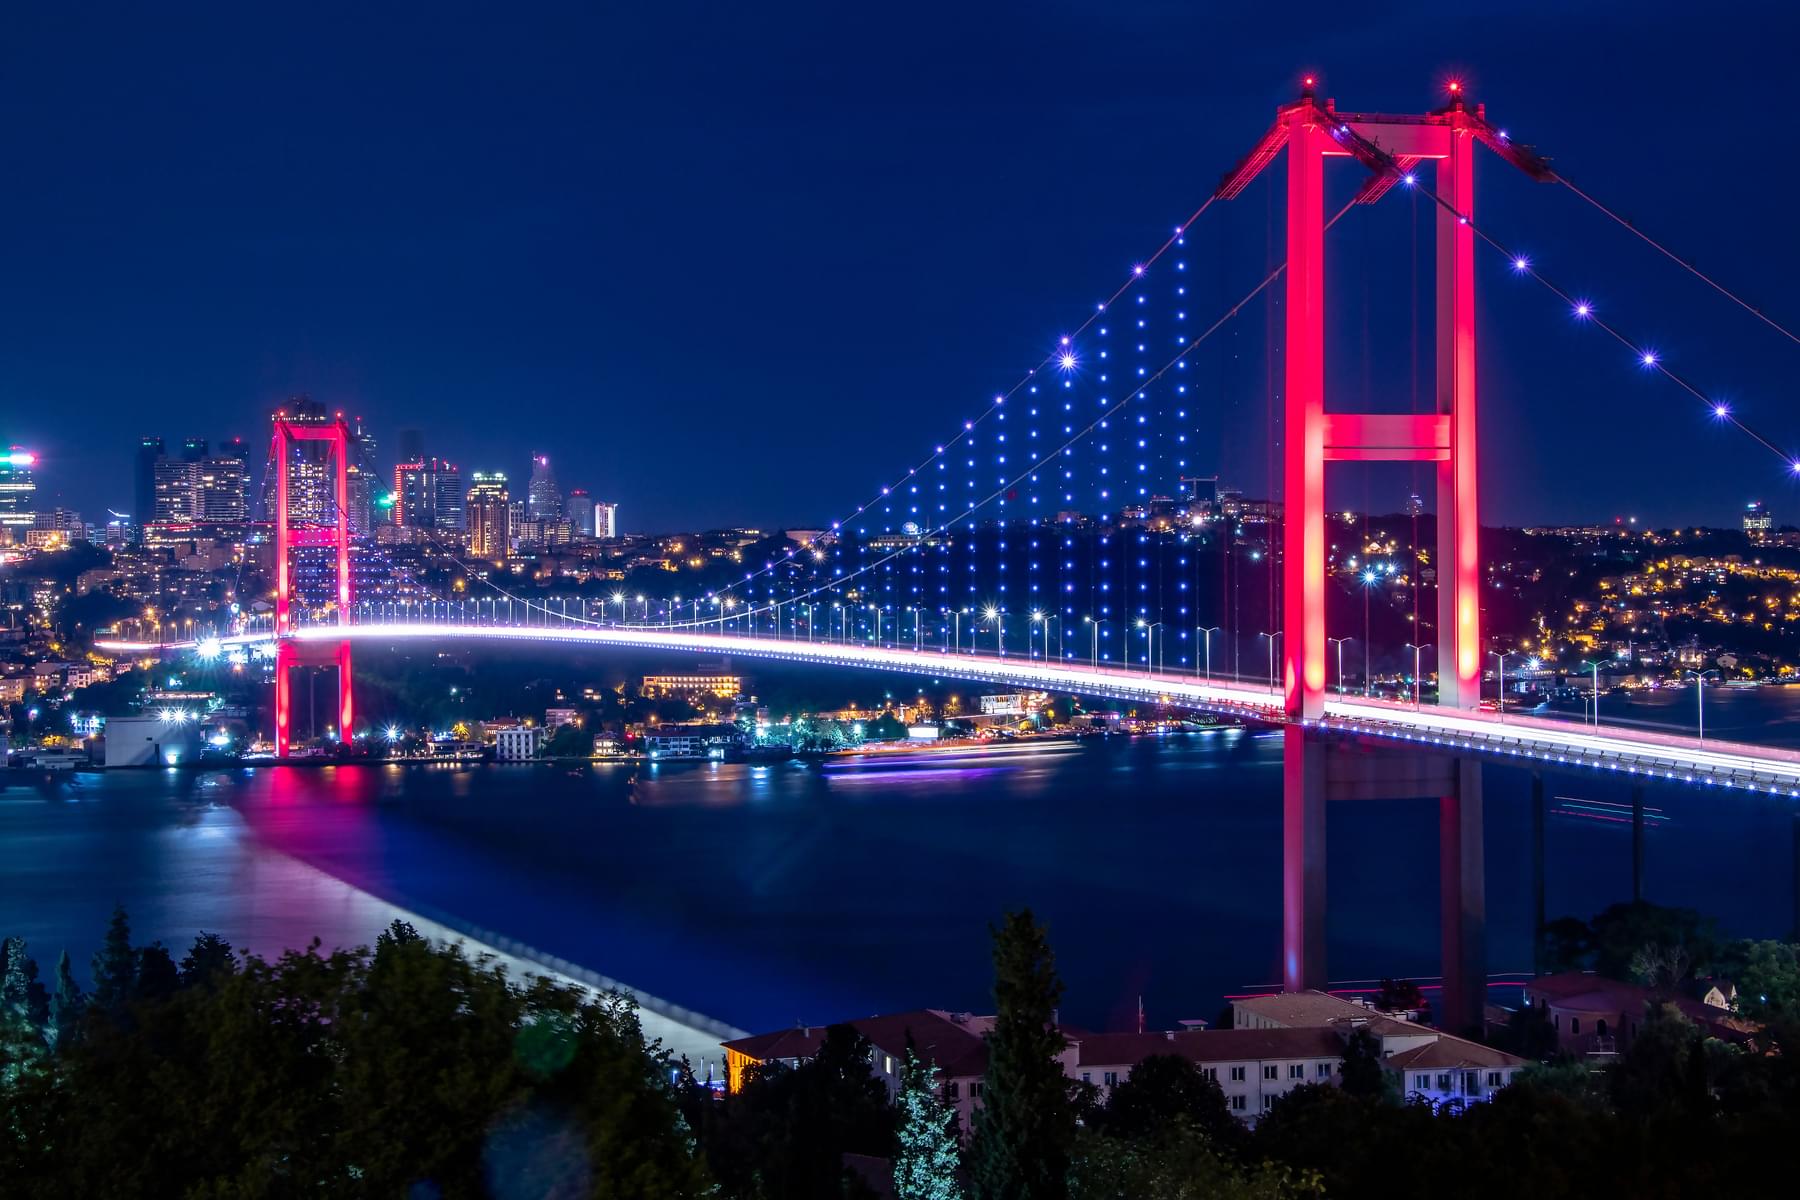 Bosphorus Bridge Facts